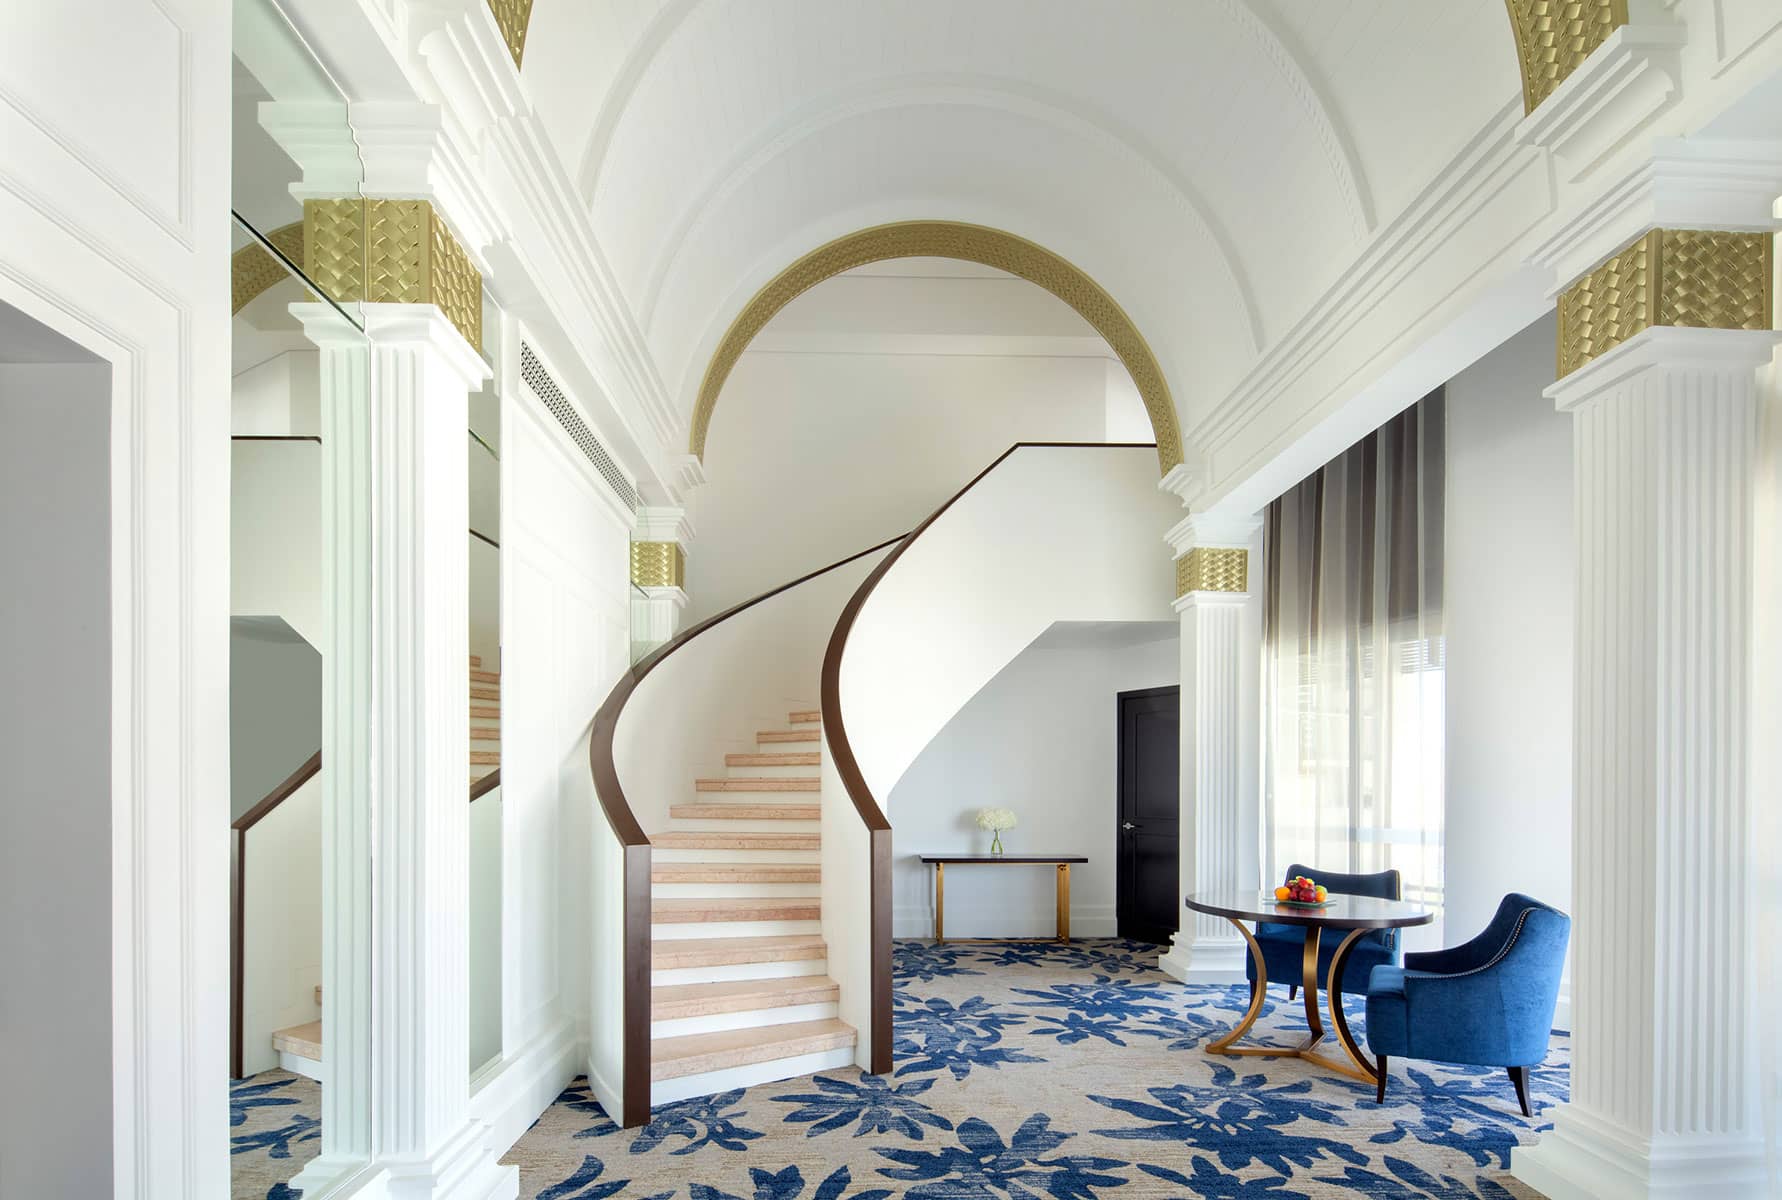 Architecture Photography Dubai: Presidential Suite Staircase, Radisson Blu Hotel, Deira, Dubai.